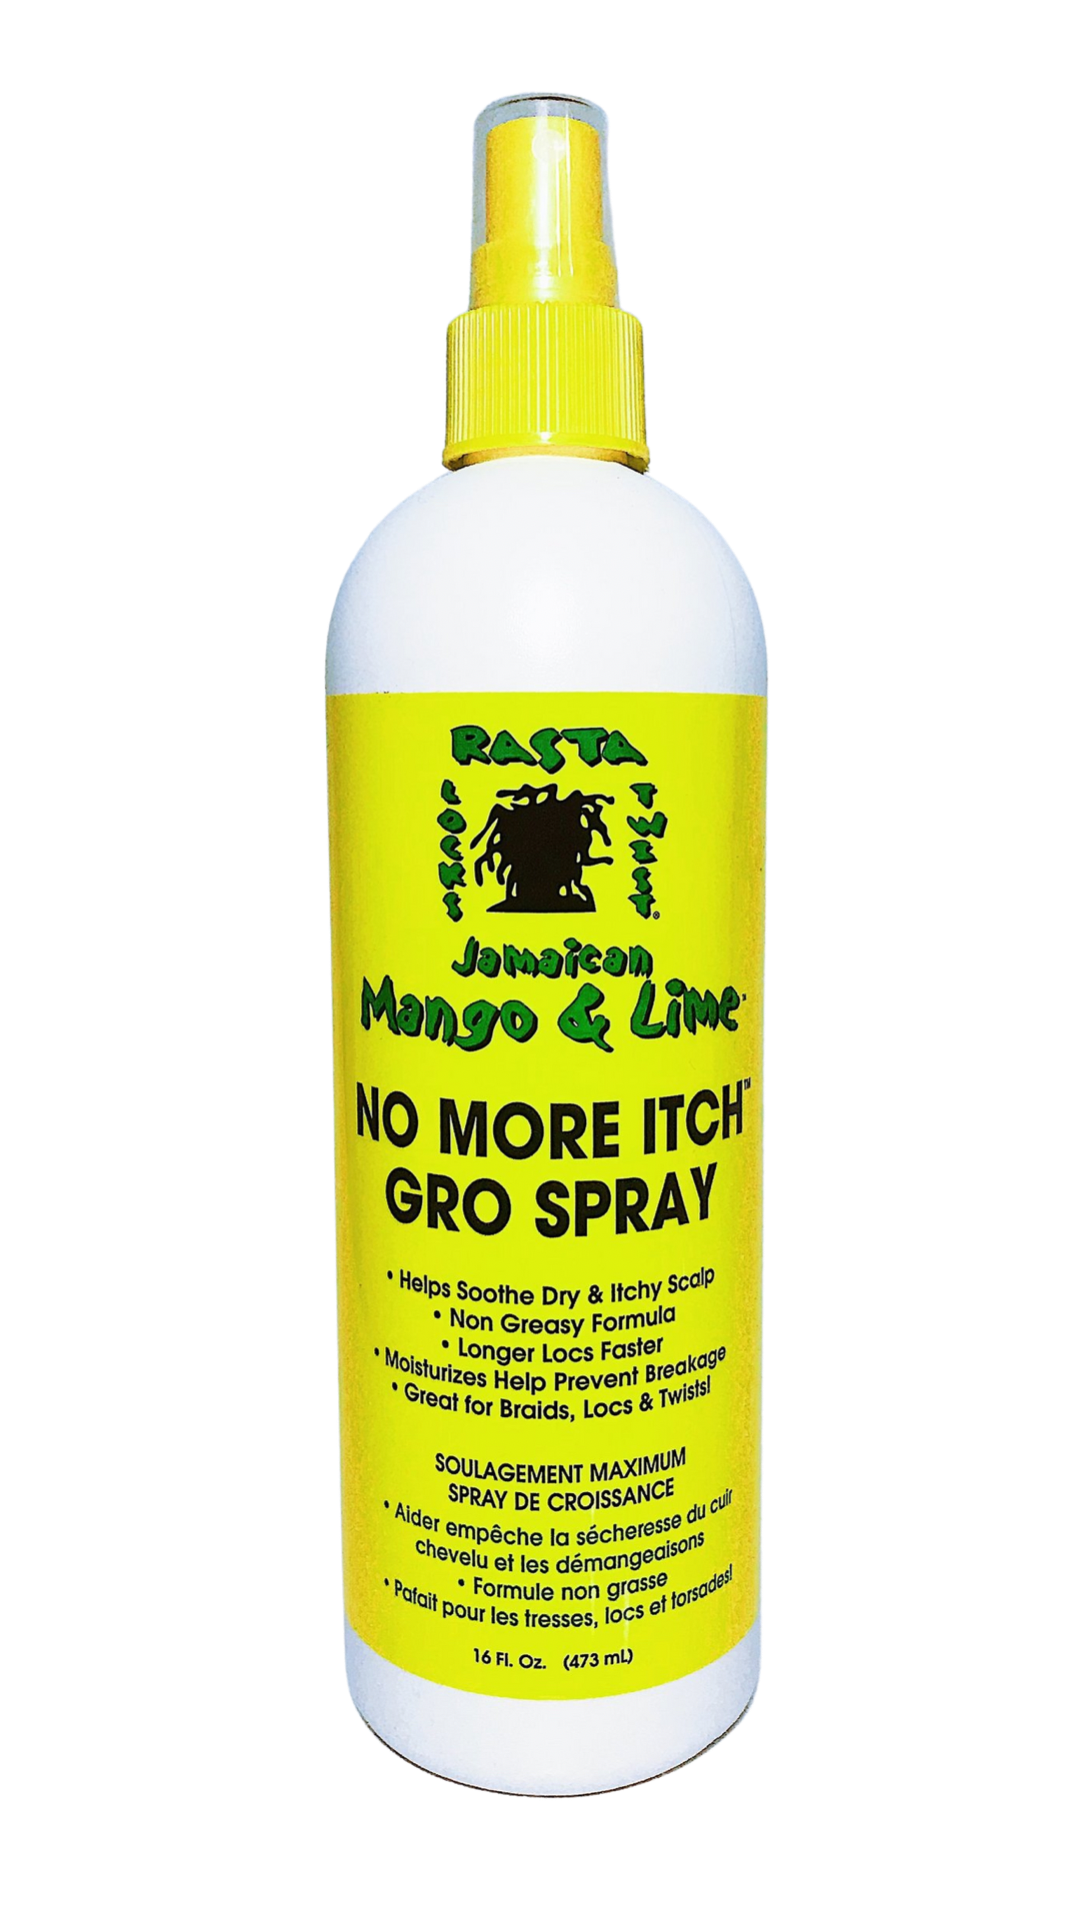 Jamaican-Mango-&-Lime-Locks-Twist-No-More-Itch-Gro-Spray.jpg